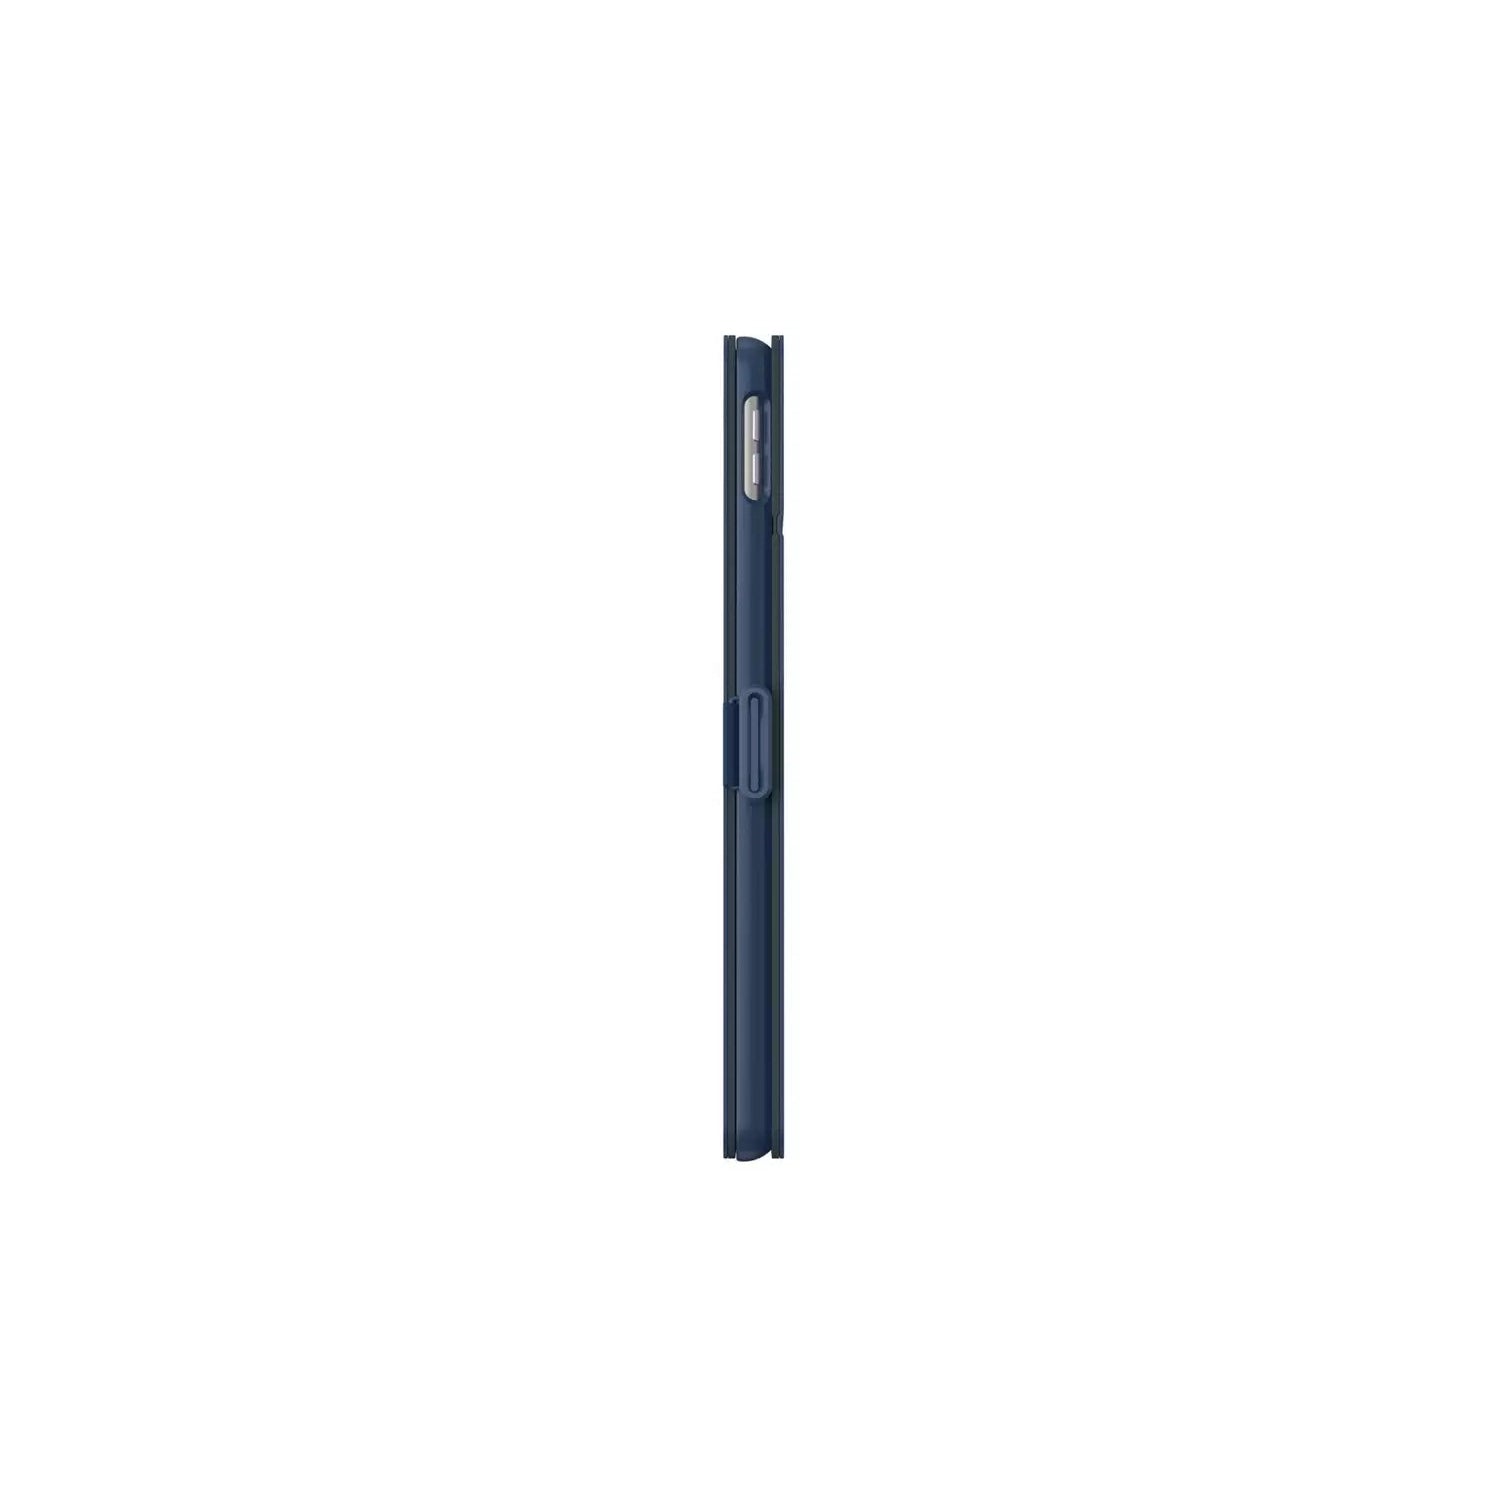 Speck Balance Folio Case for 10.5-Inch iPad Air (2019) - Blue